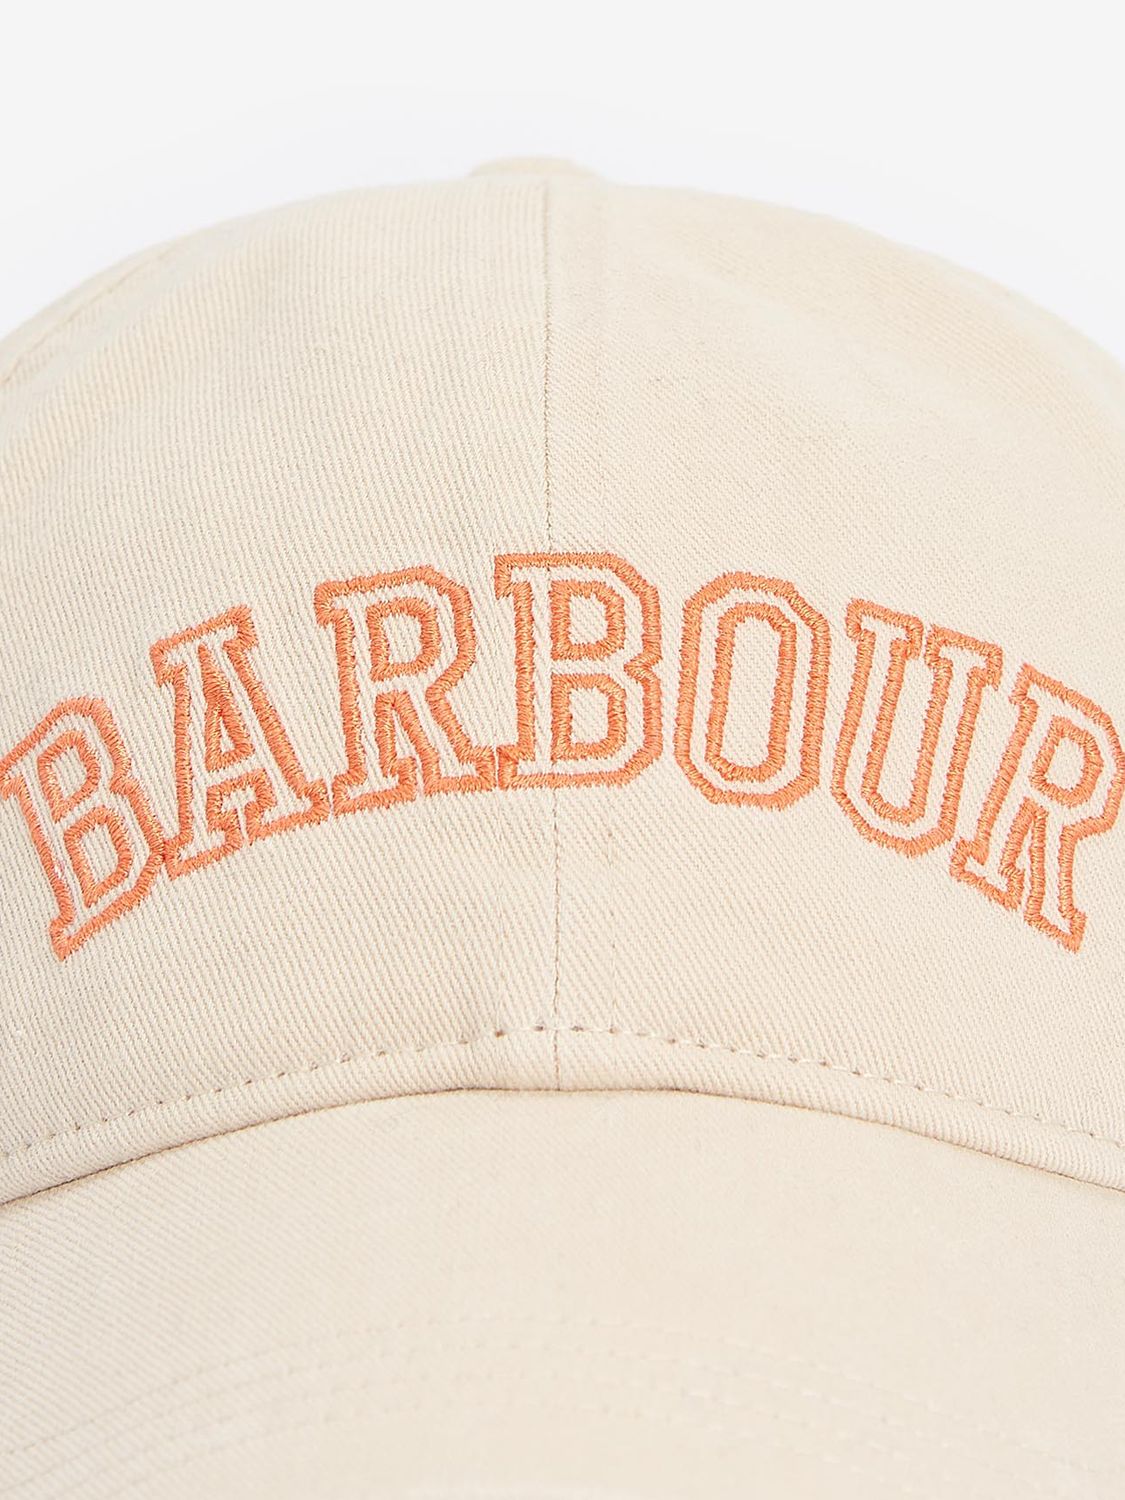 Barbour Emily Sports Cap, White/Orange